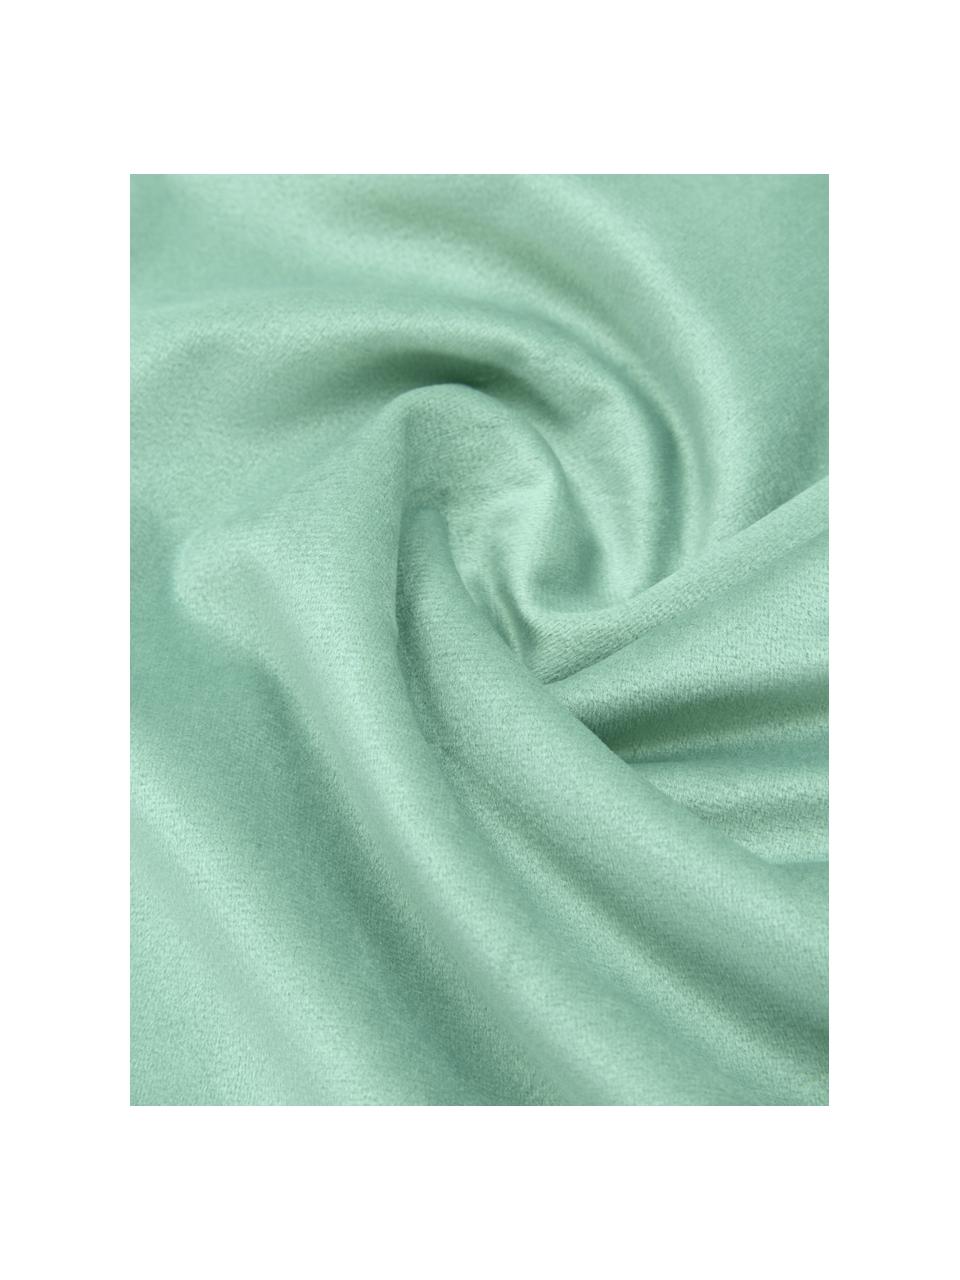 Housse de coussin rectangulaire en velours vert sauge Lucie, 100 % velours de polyester, Vert, larg. 30 x long. 50 cm